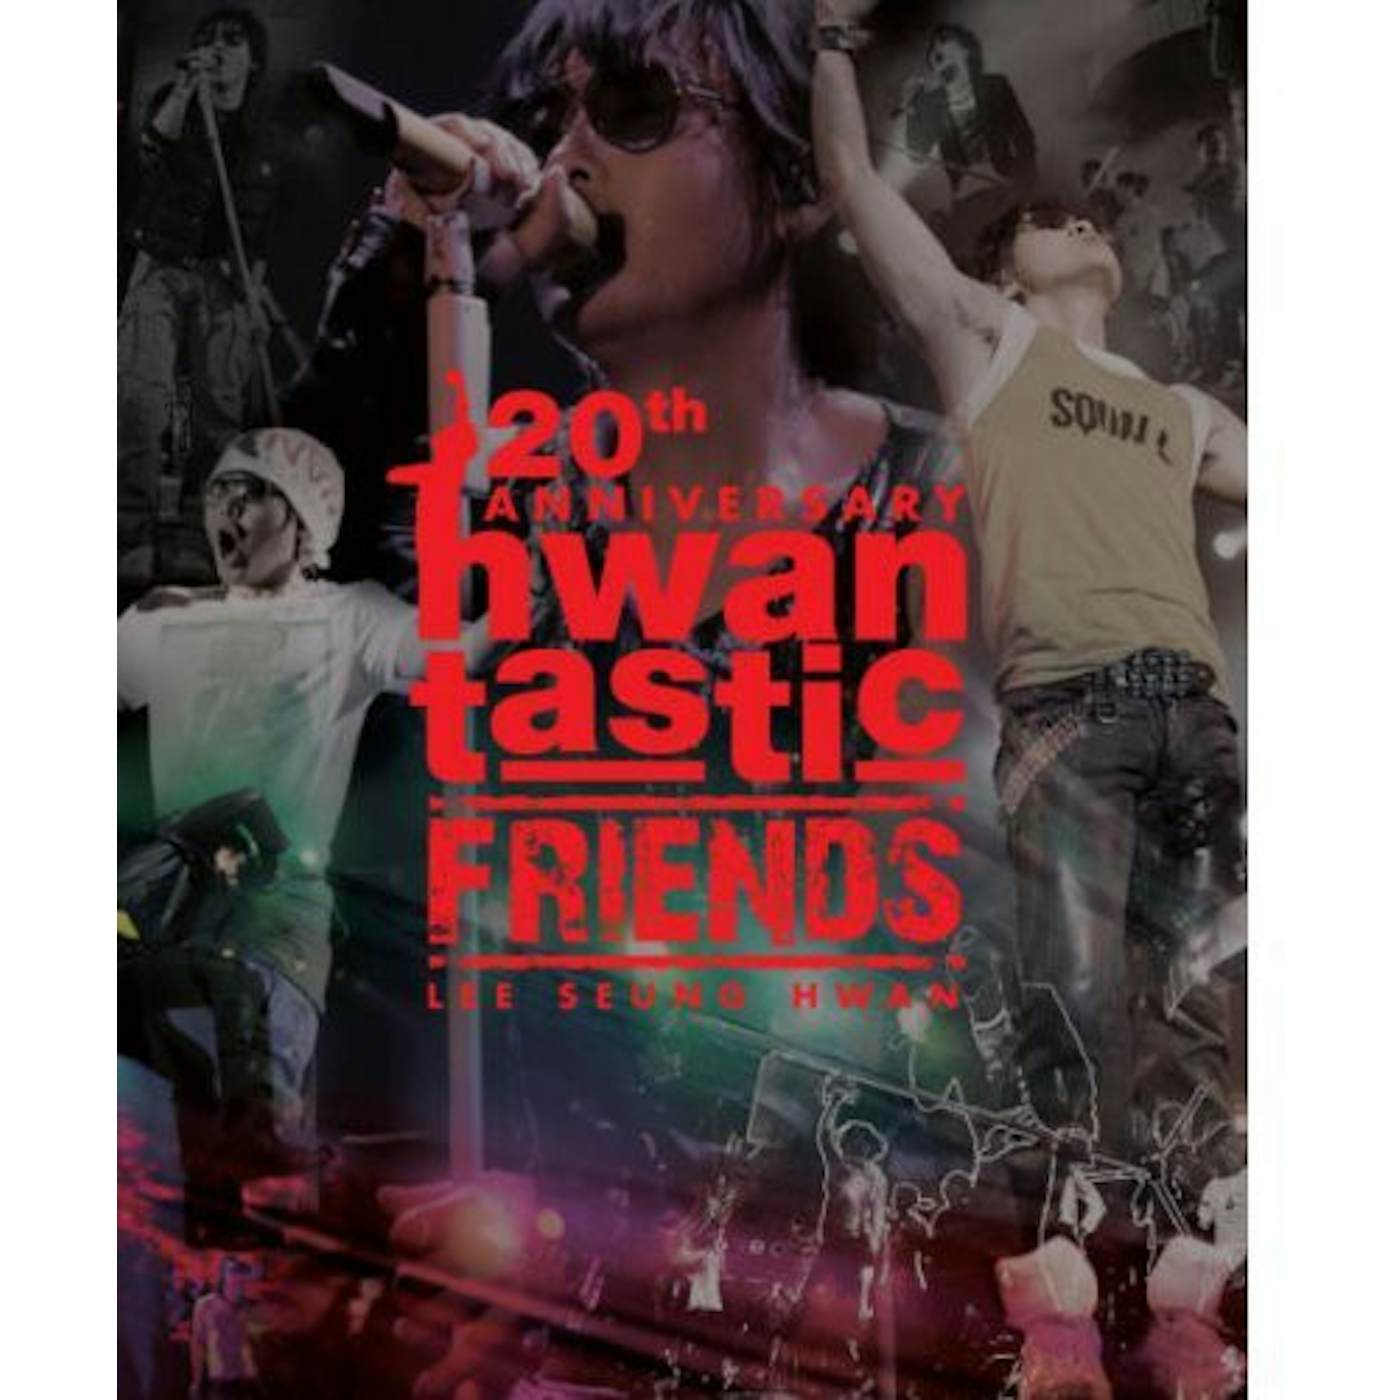 LEE SEUNG HWAN HWANTASTIC FRIENDS CD